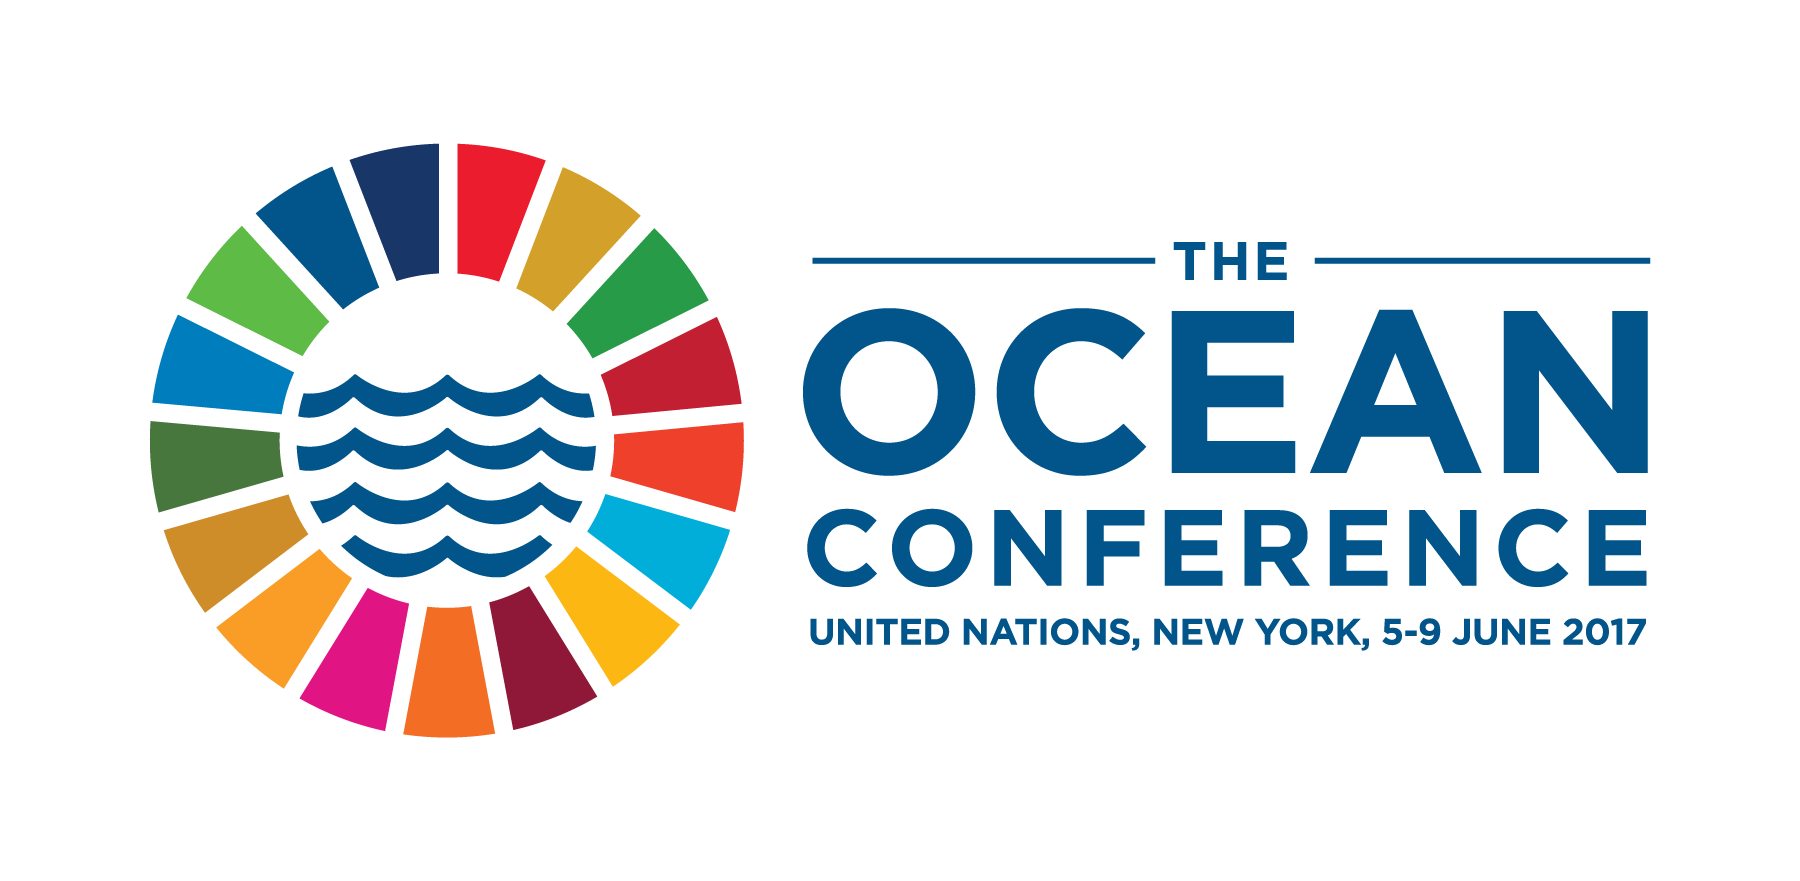 The Ocean Conference, UN, New York, 5-9 June 2017